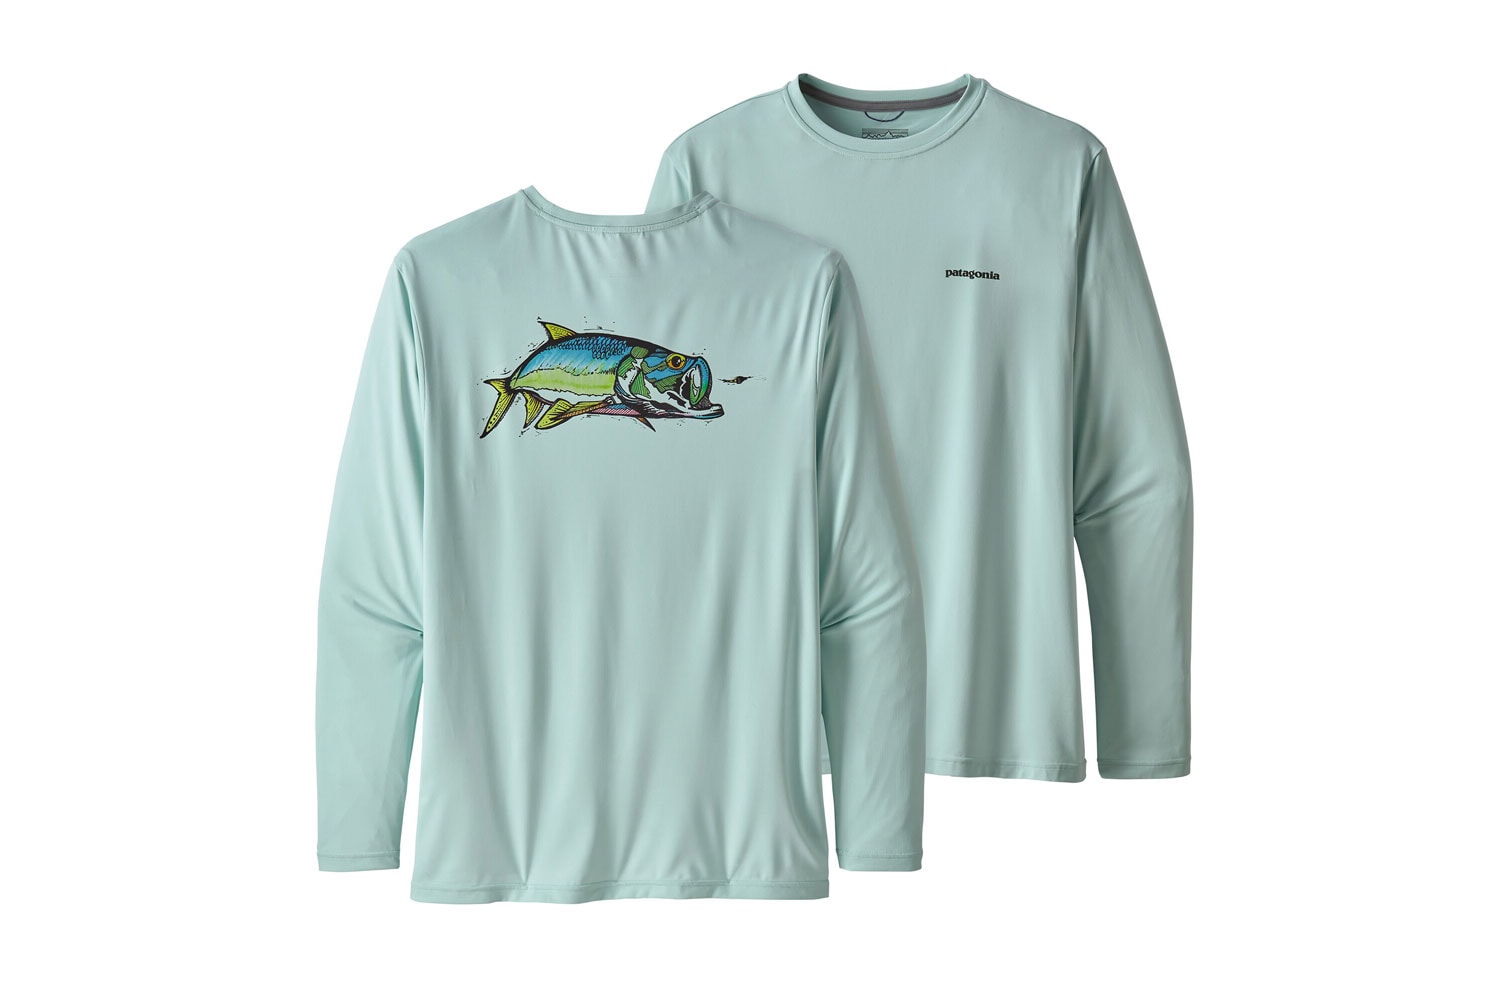 Patagonia Fish-Inspired Graphic T-Shirts